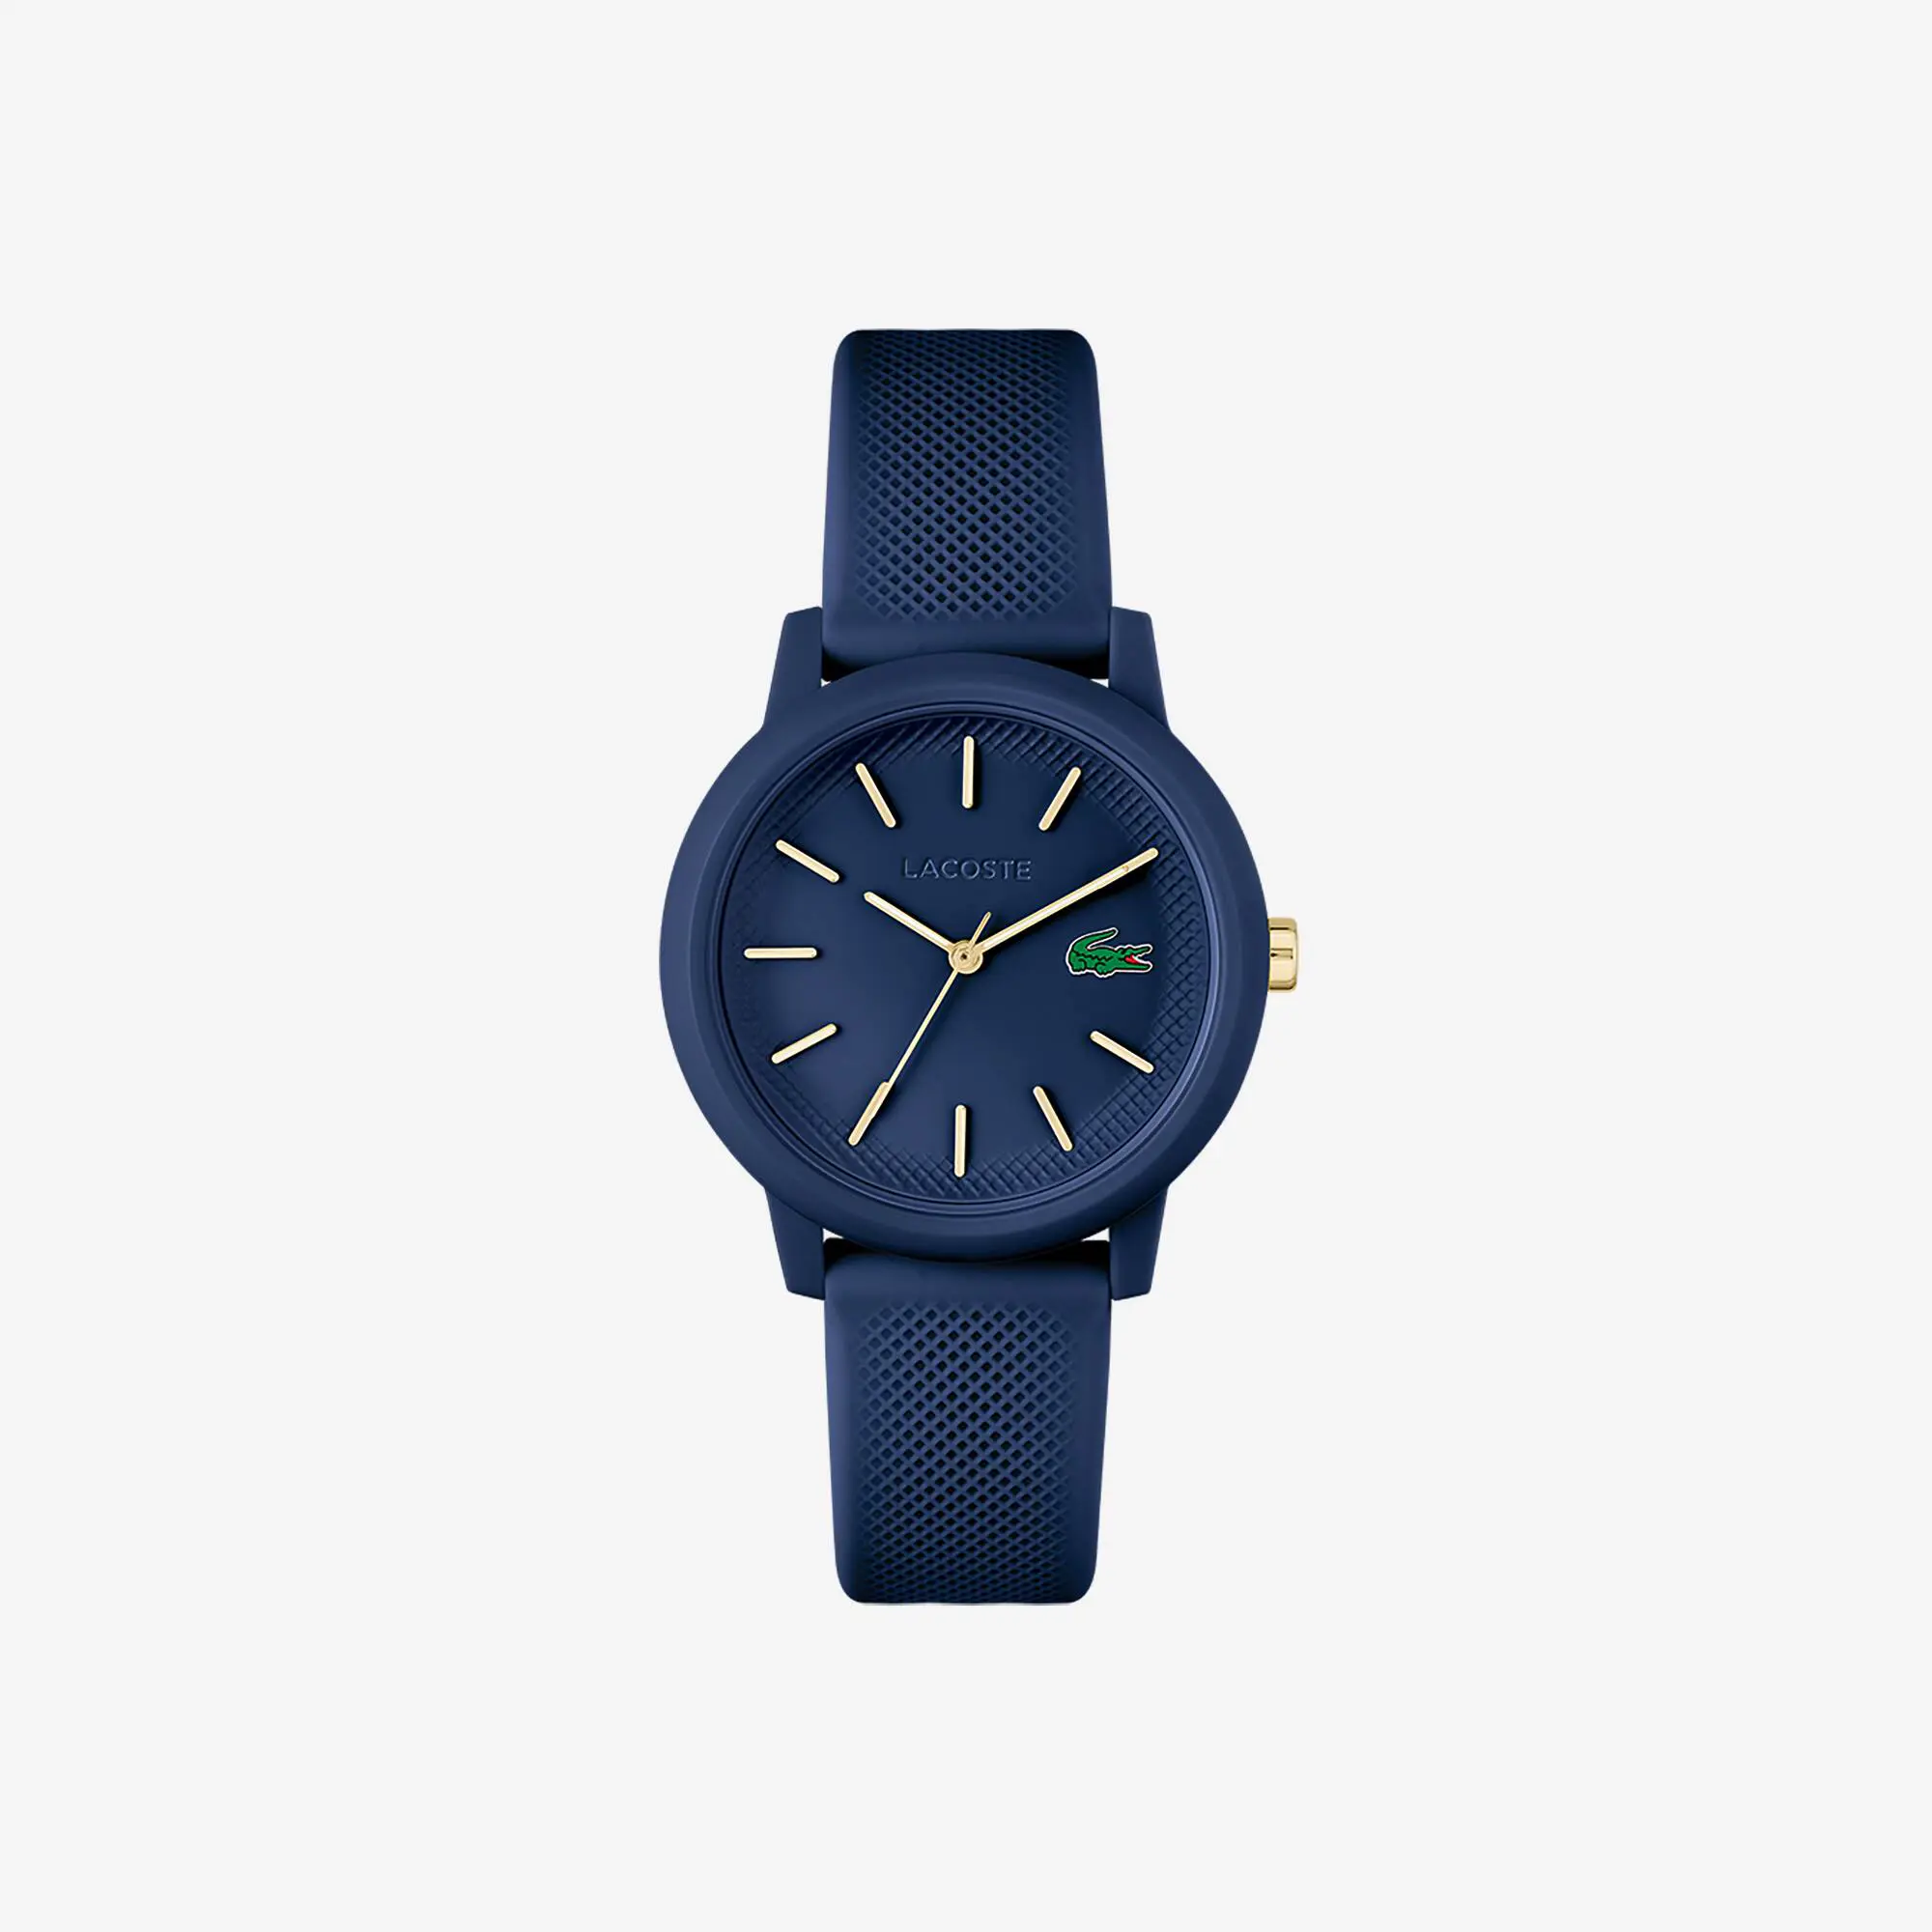 Lacoste Damen LACOSTE 12.12 Armbanduhr mit blauem Silikonband. 1